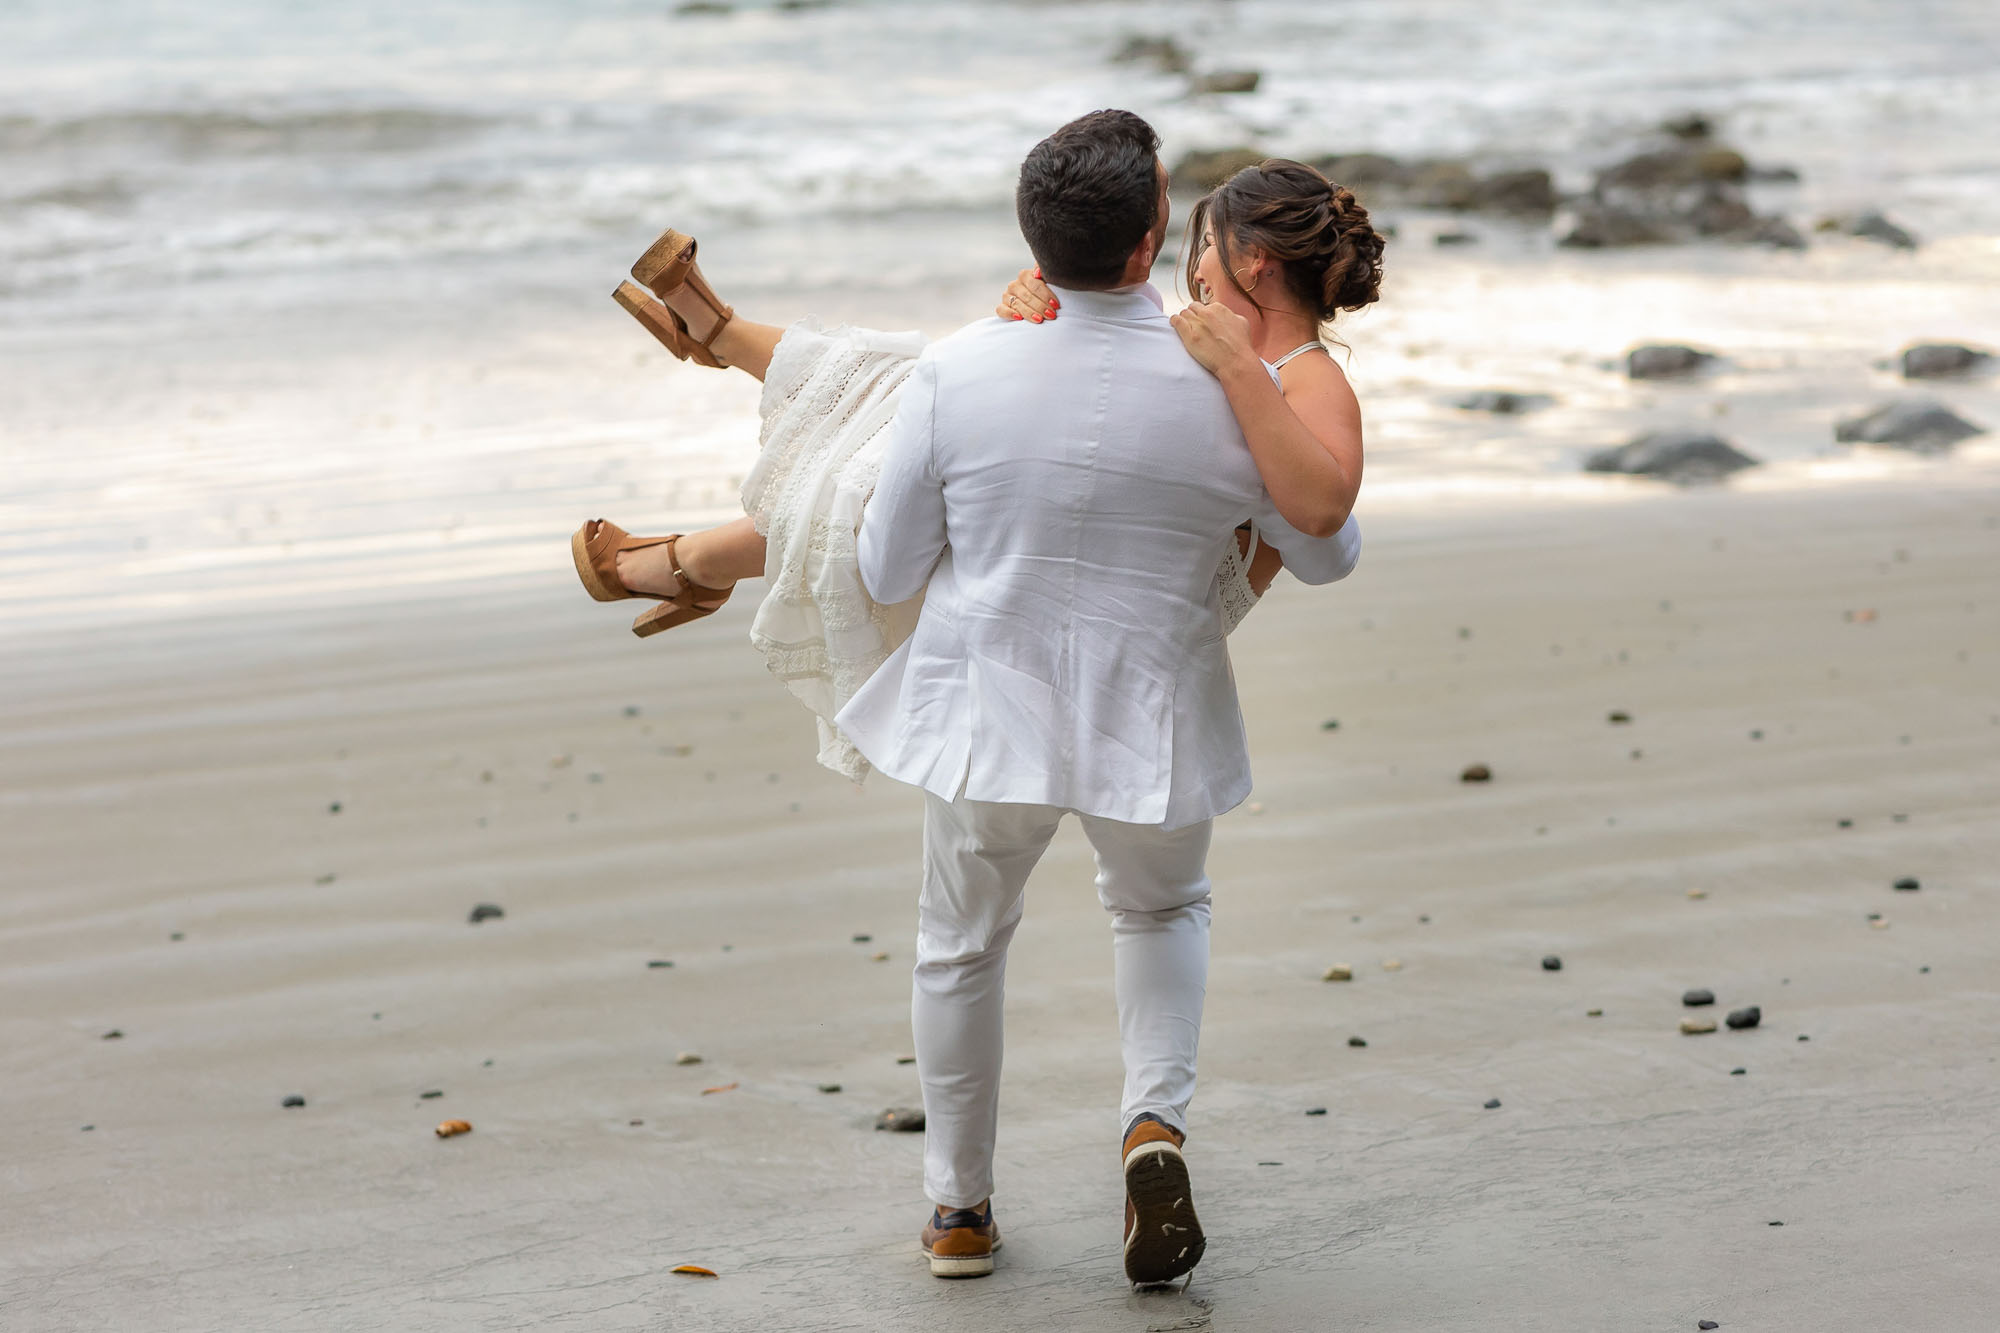 The groom carries his bride off toward the ocean